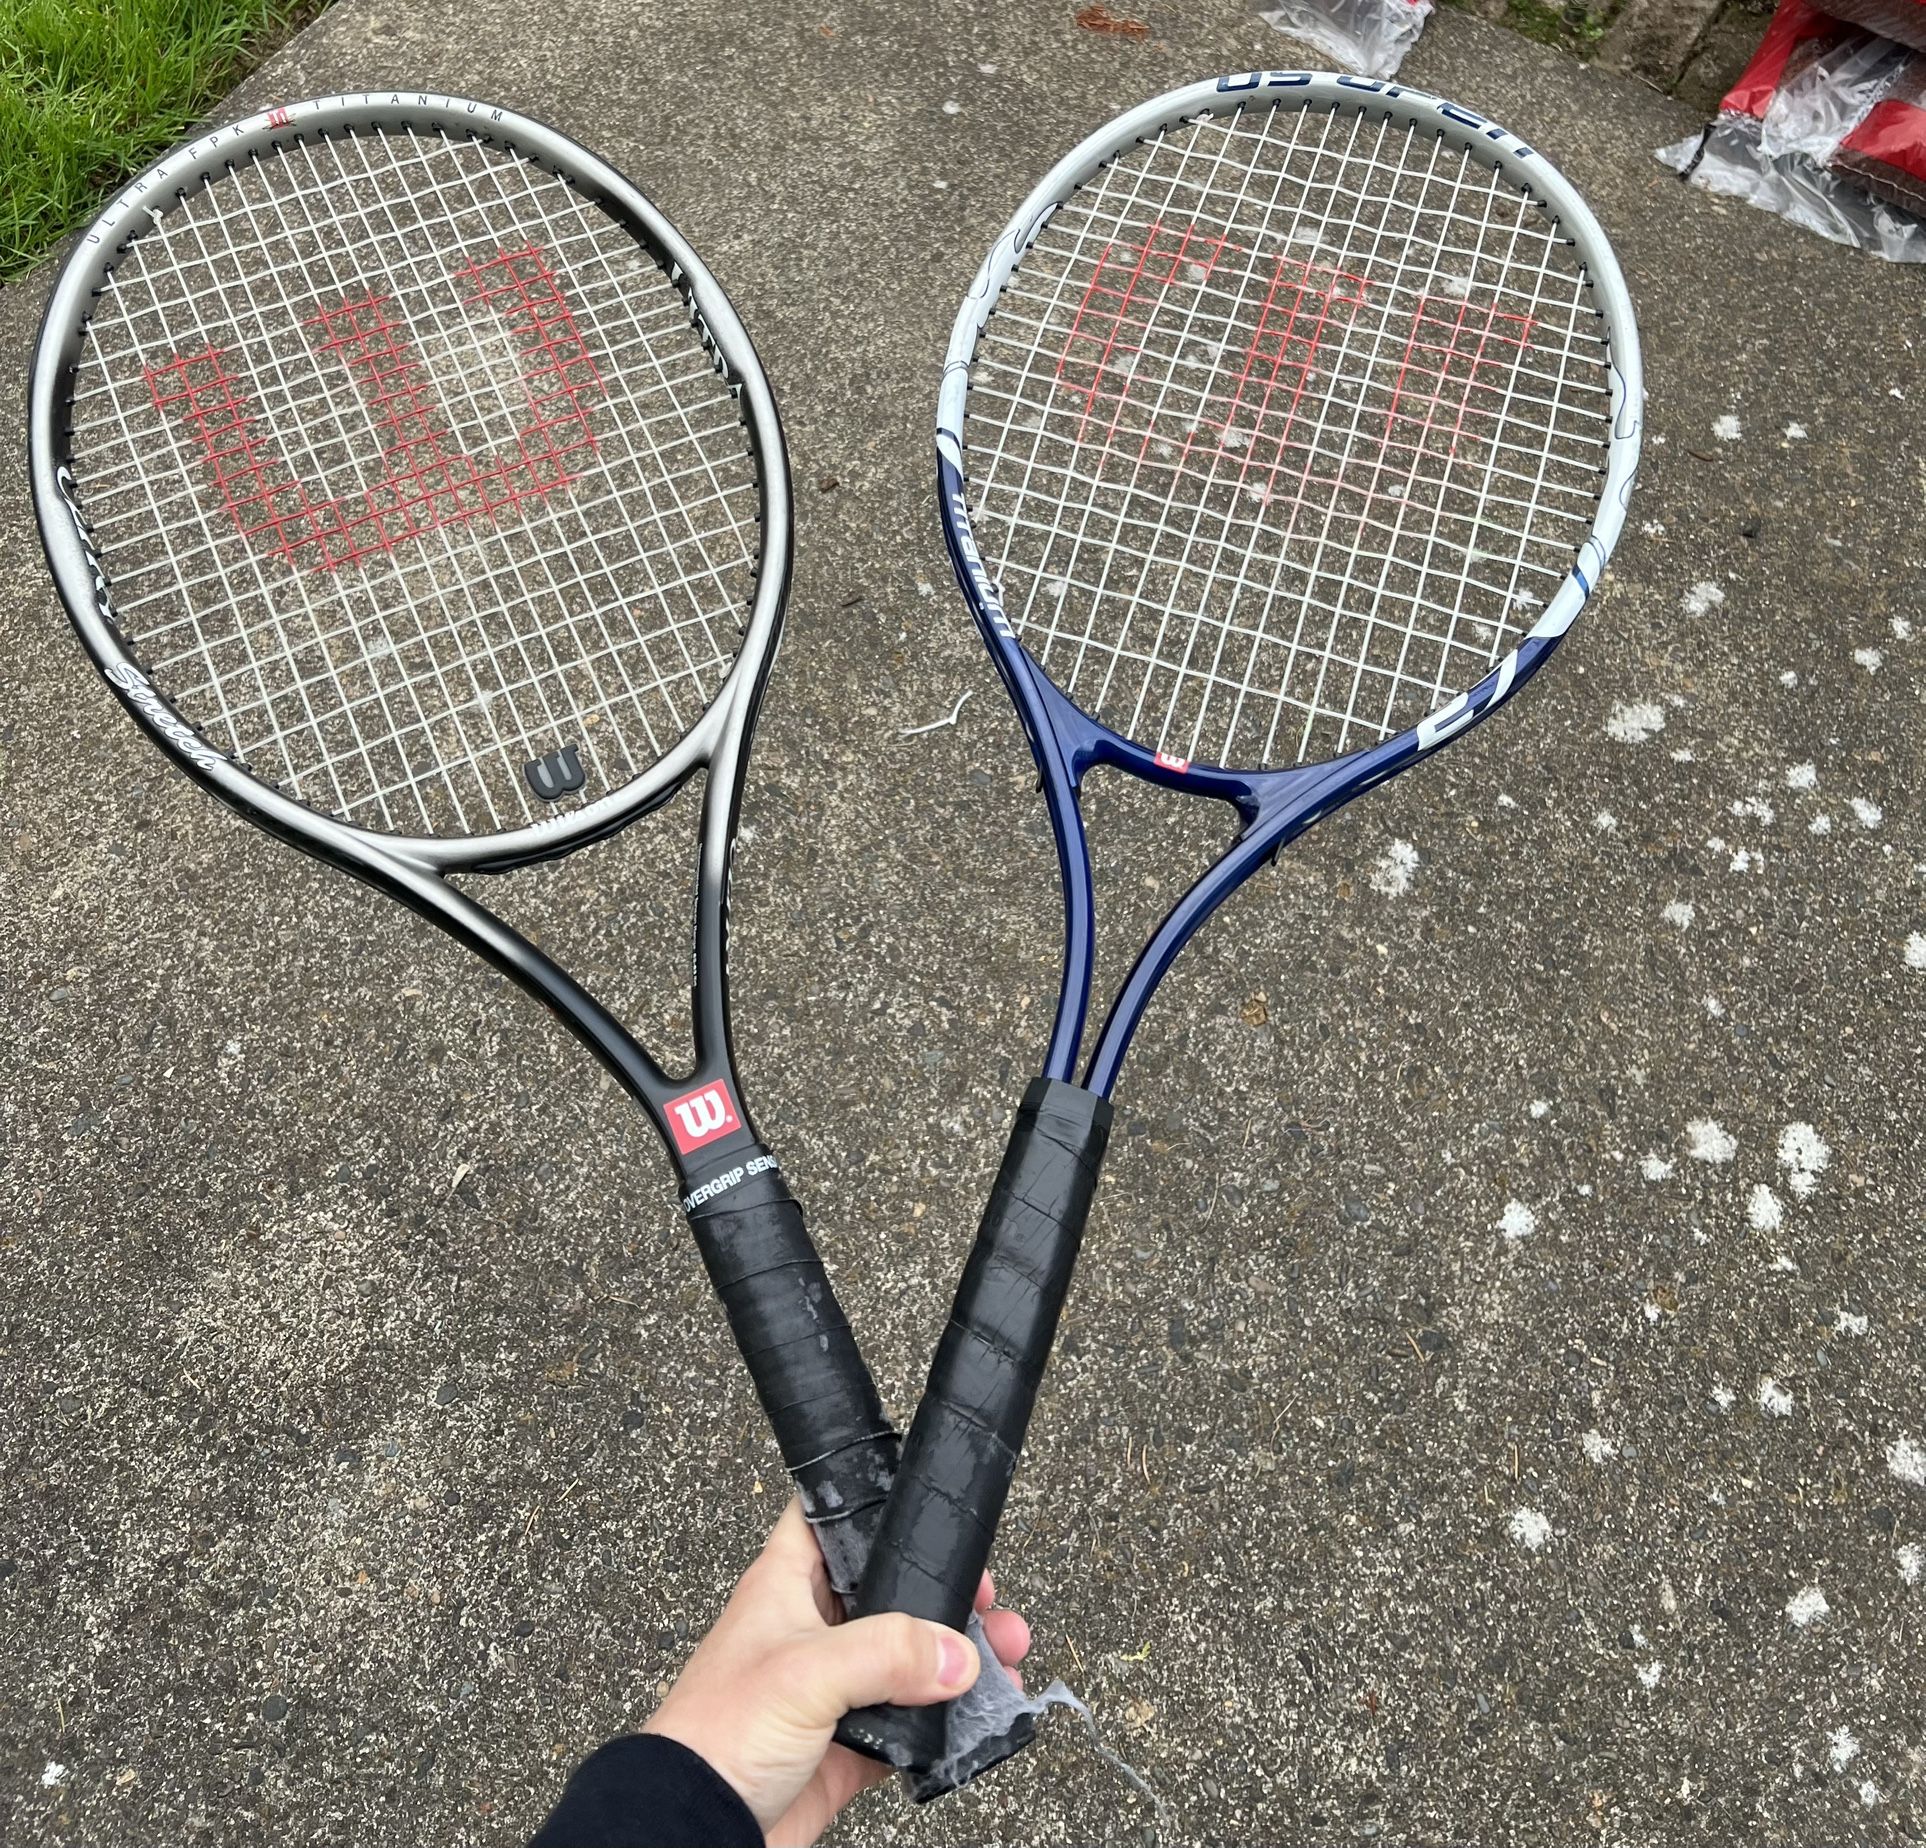 Box Of Tennis Balls and 2 Tennis Rackets